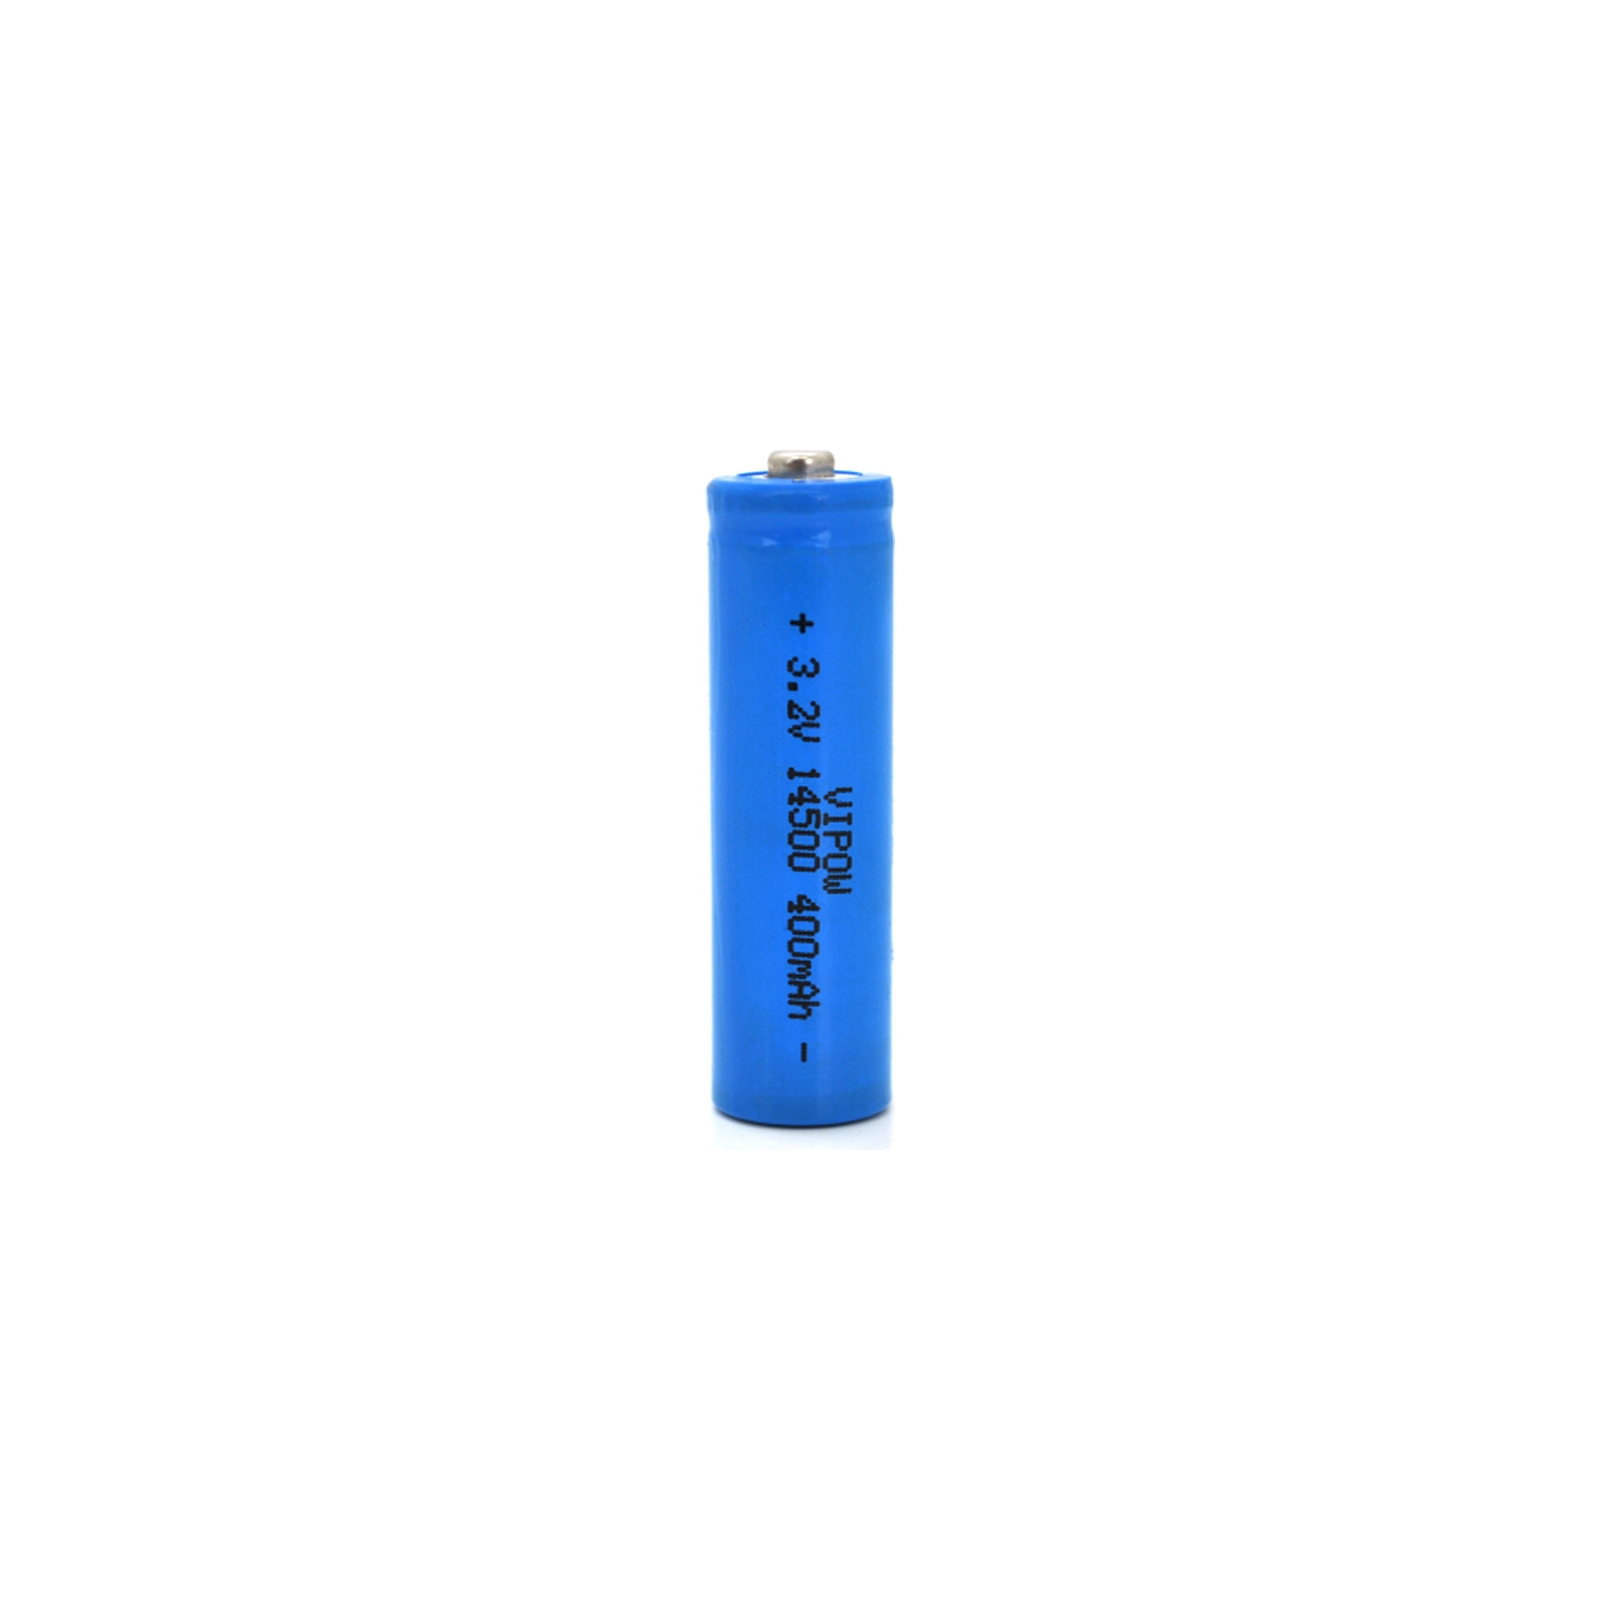 Аккумулятор 14500 LiFePO4 (size AA), 400mAh, 3.2V, TipTop, blue Vipow (IFR14500-400mAhTT / 21438)